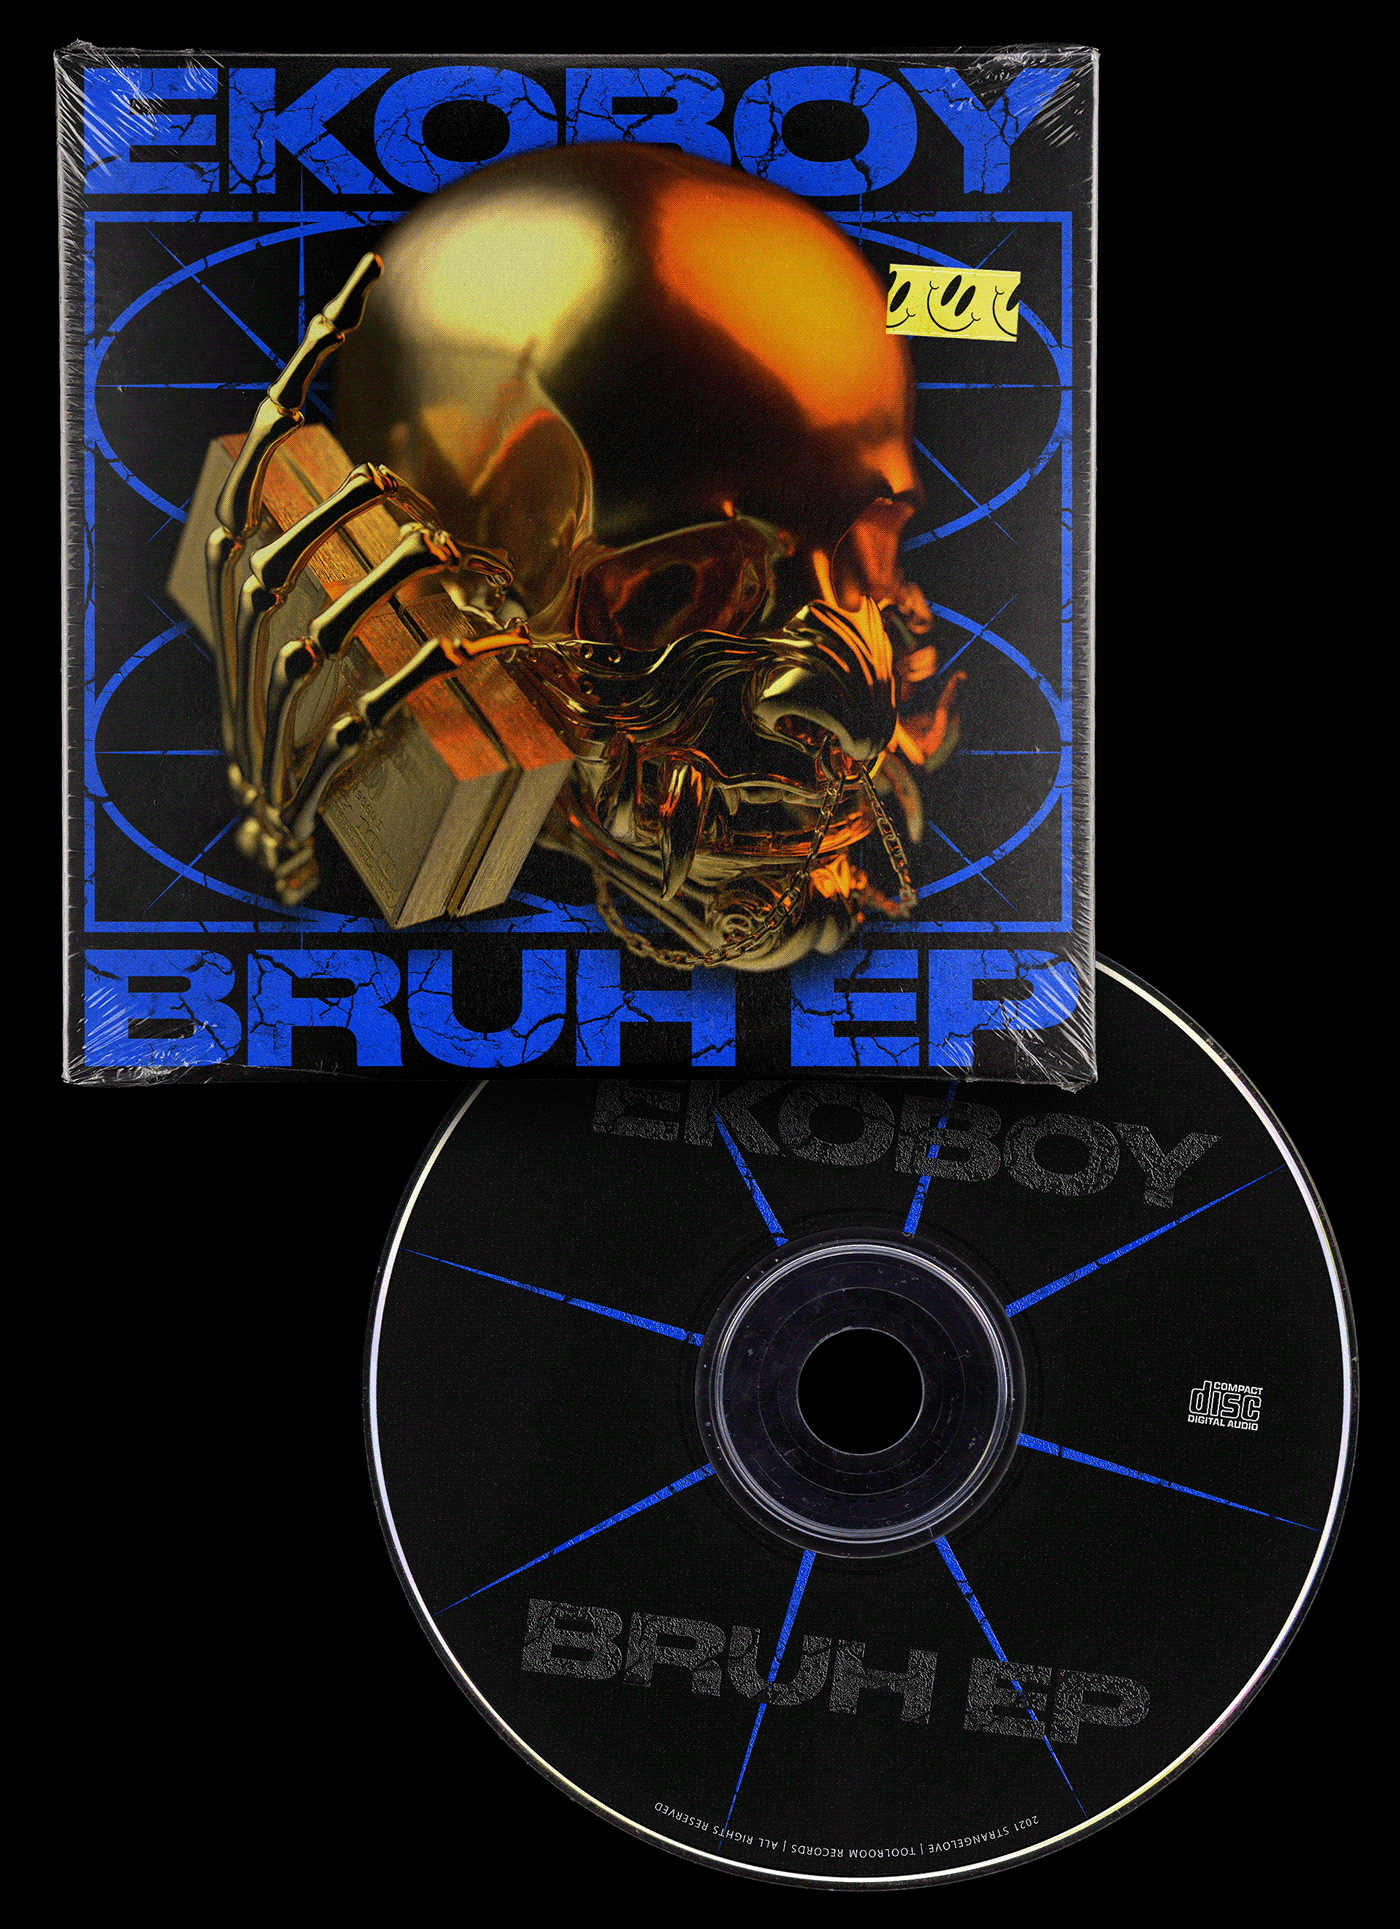 album cover artwork Brutalism cd CD cover cover Cover Art Digital Art  graphic design  poster